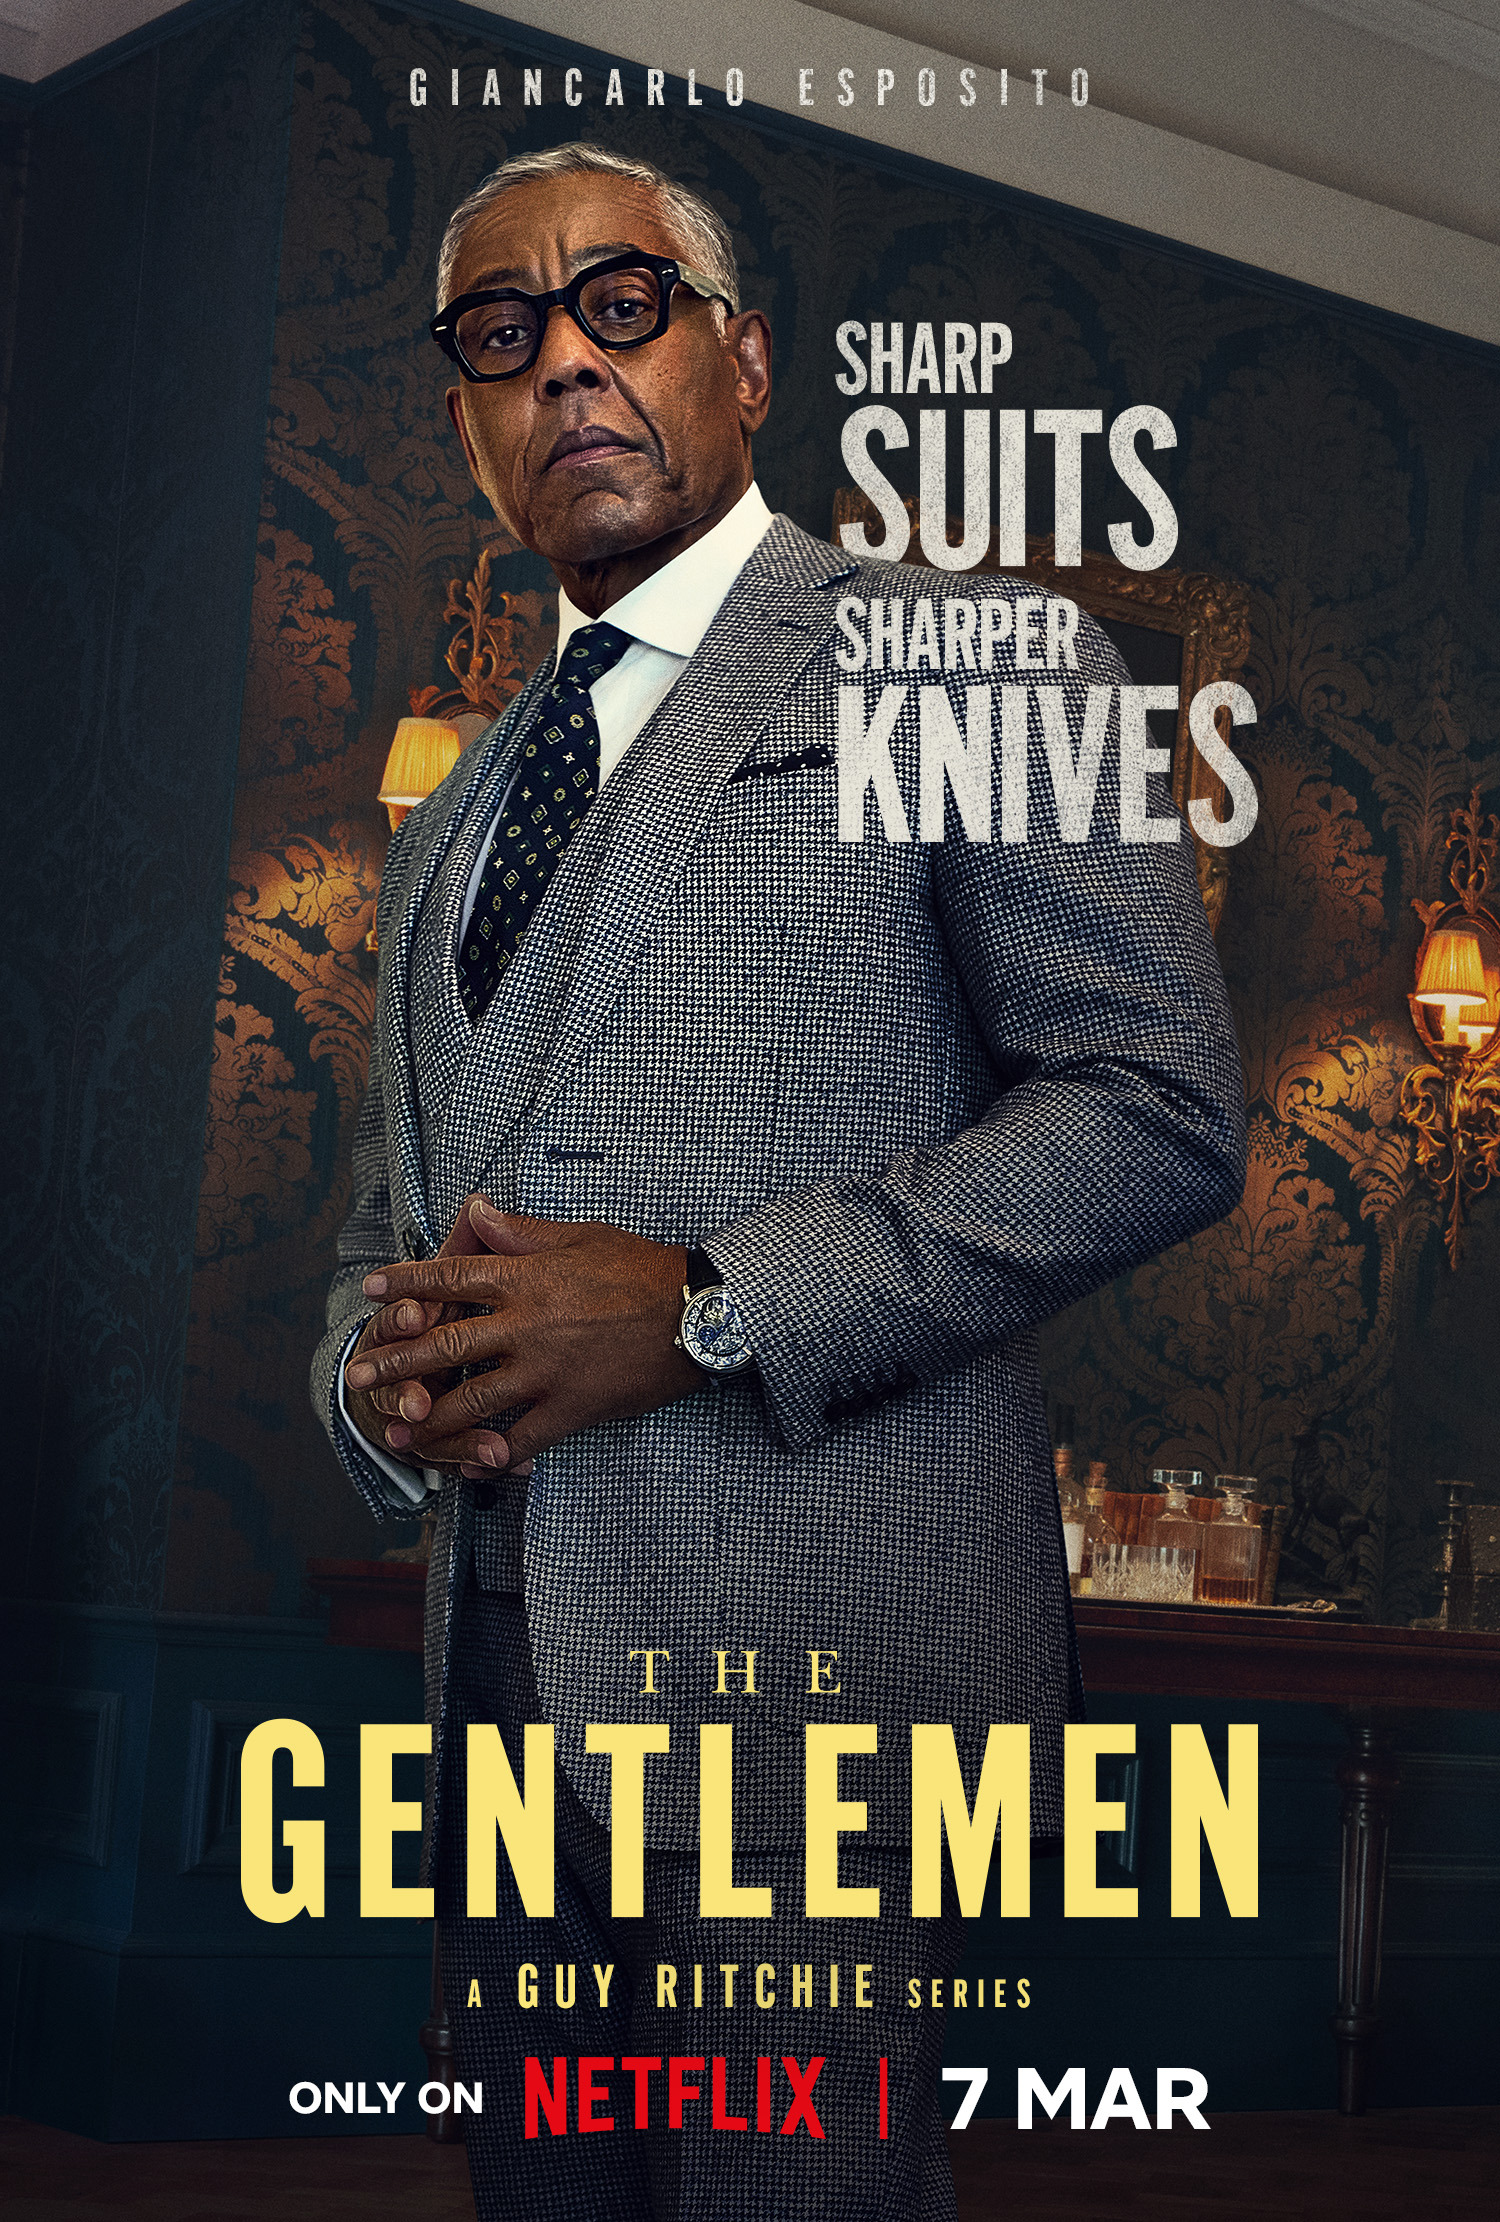 Mega Sized TV Poster Image for The Gentlemen (#9 of 9)